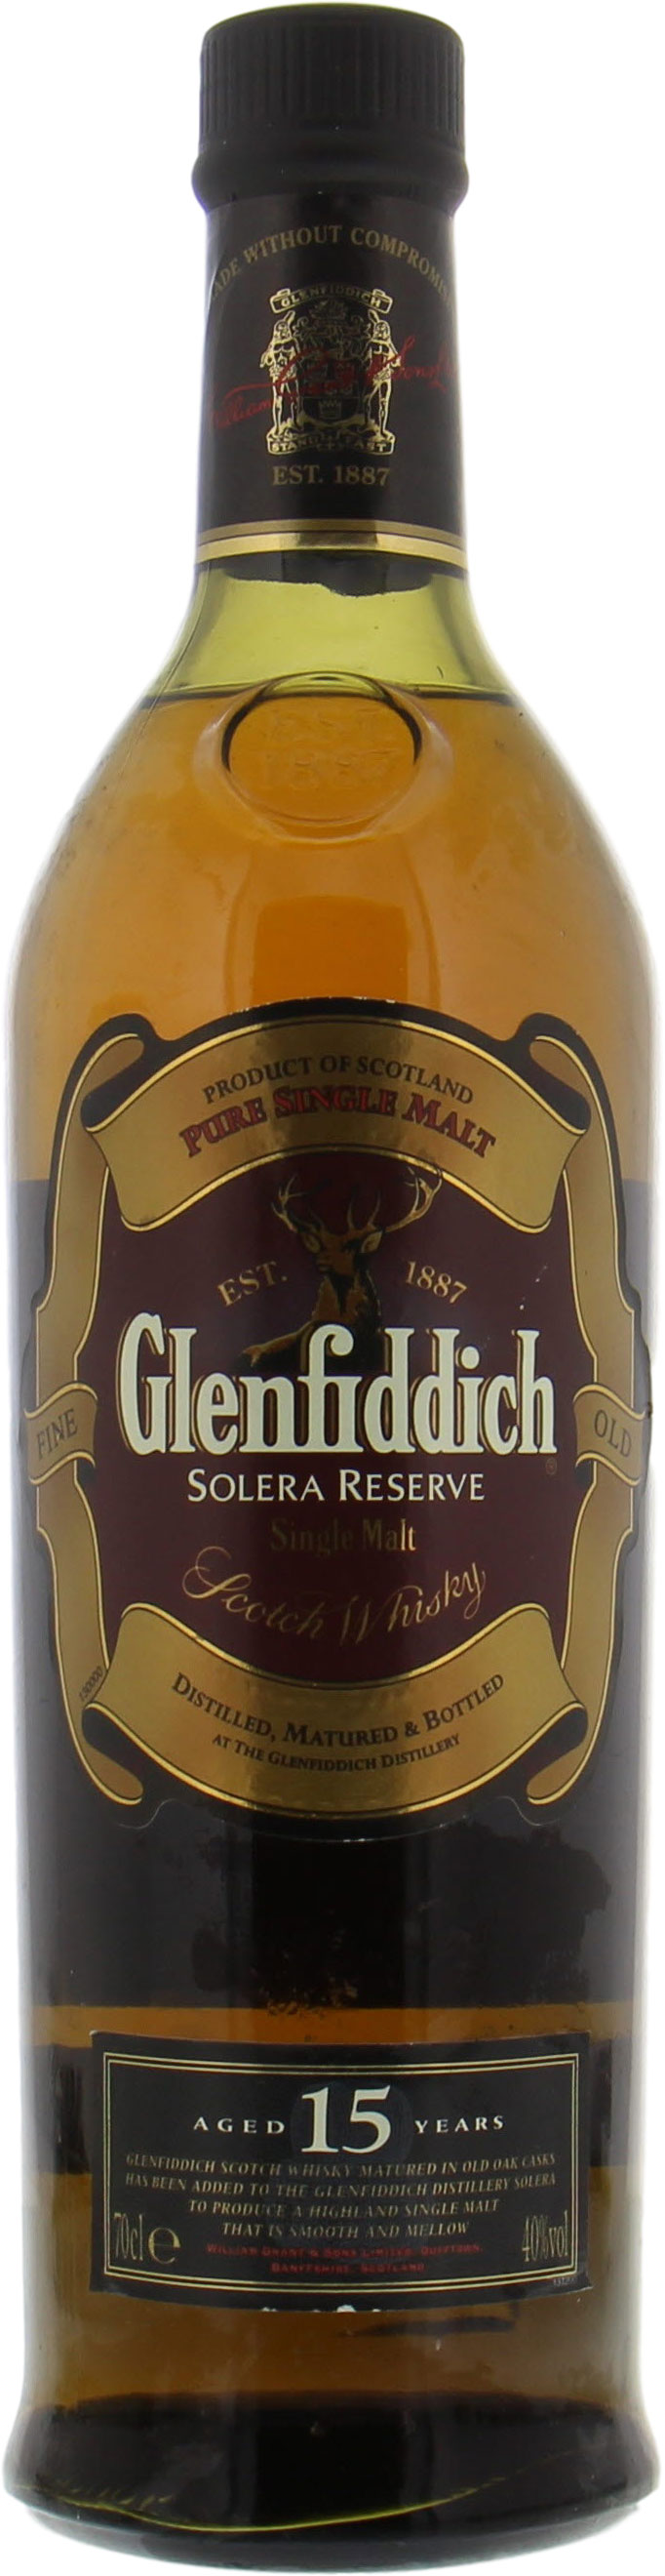 Glenfiddich - Solera Reserve 15 Years 40% NV